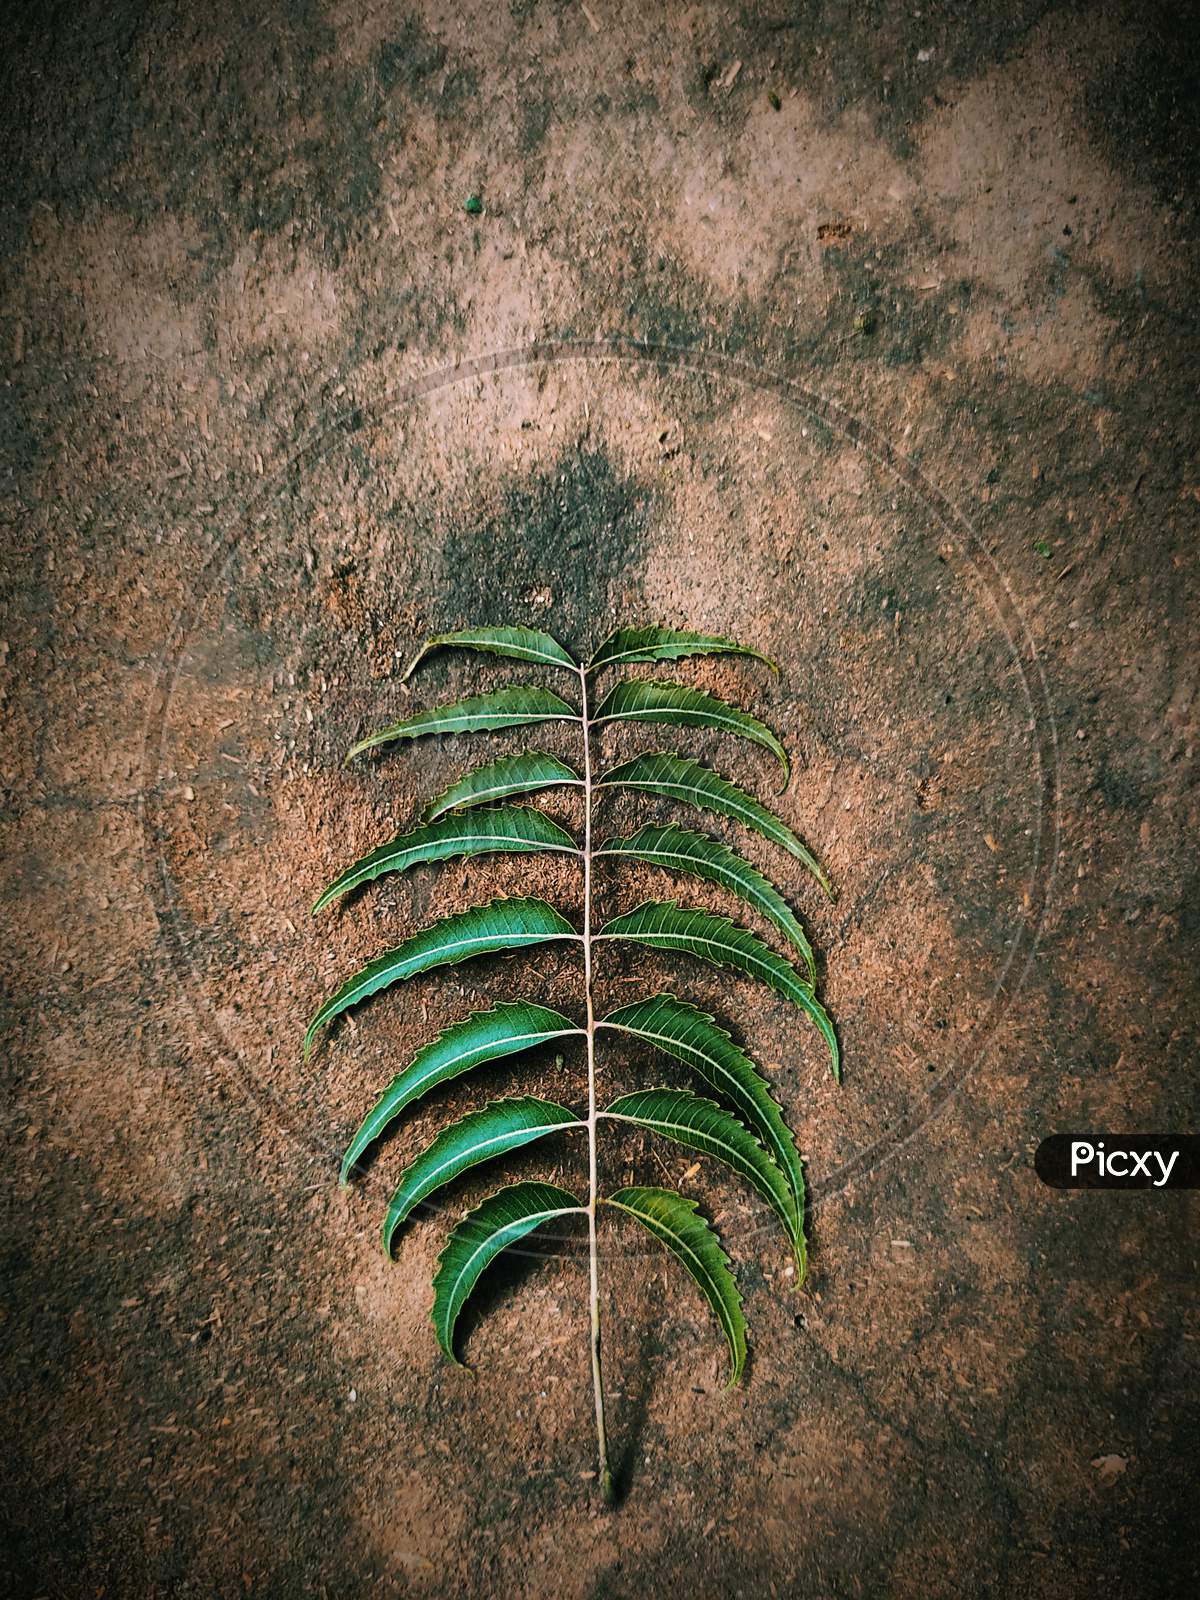 The beautiful tree leaf